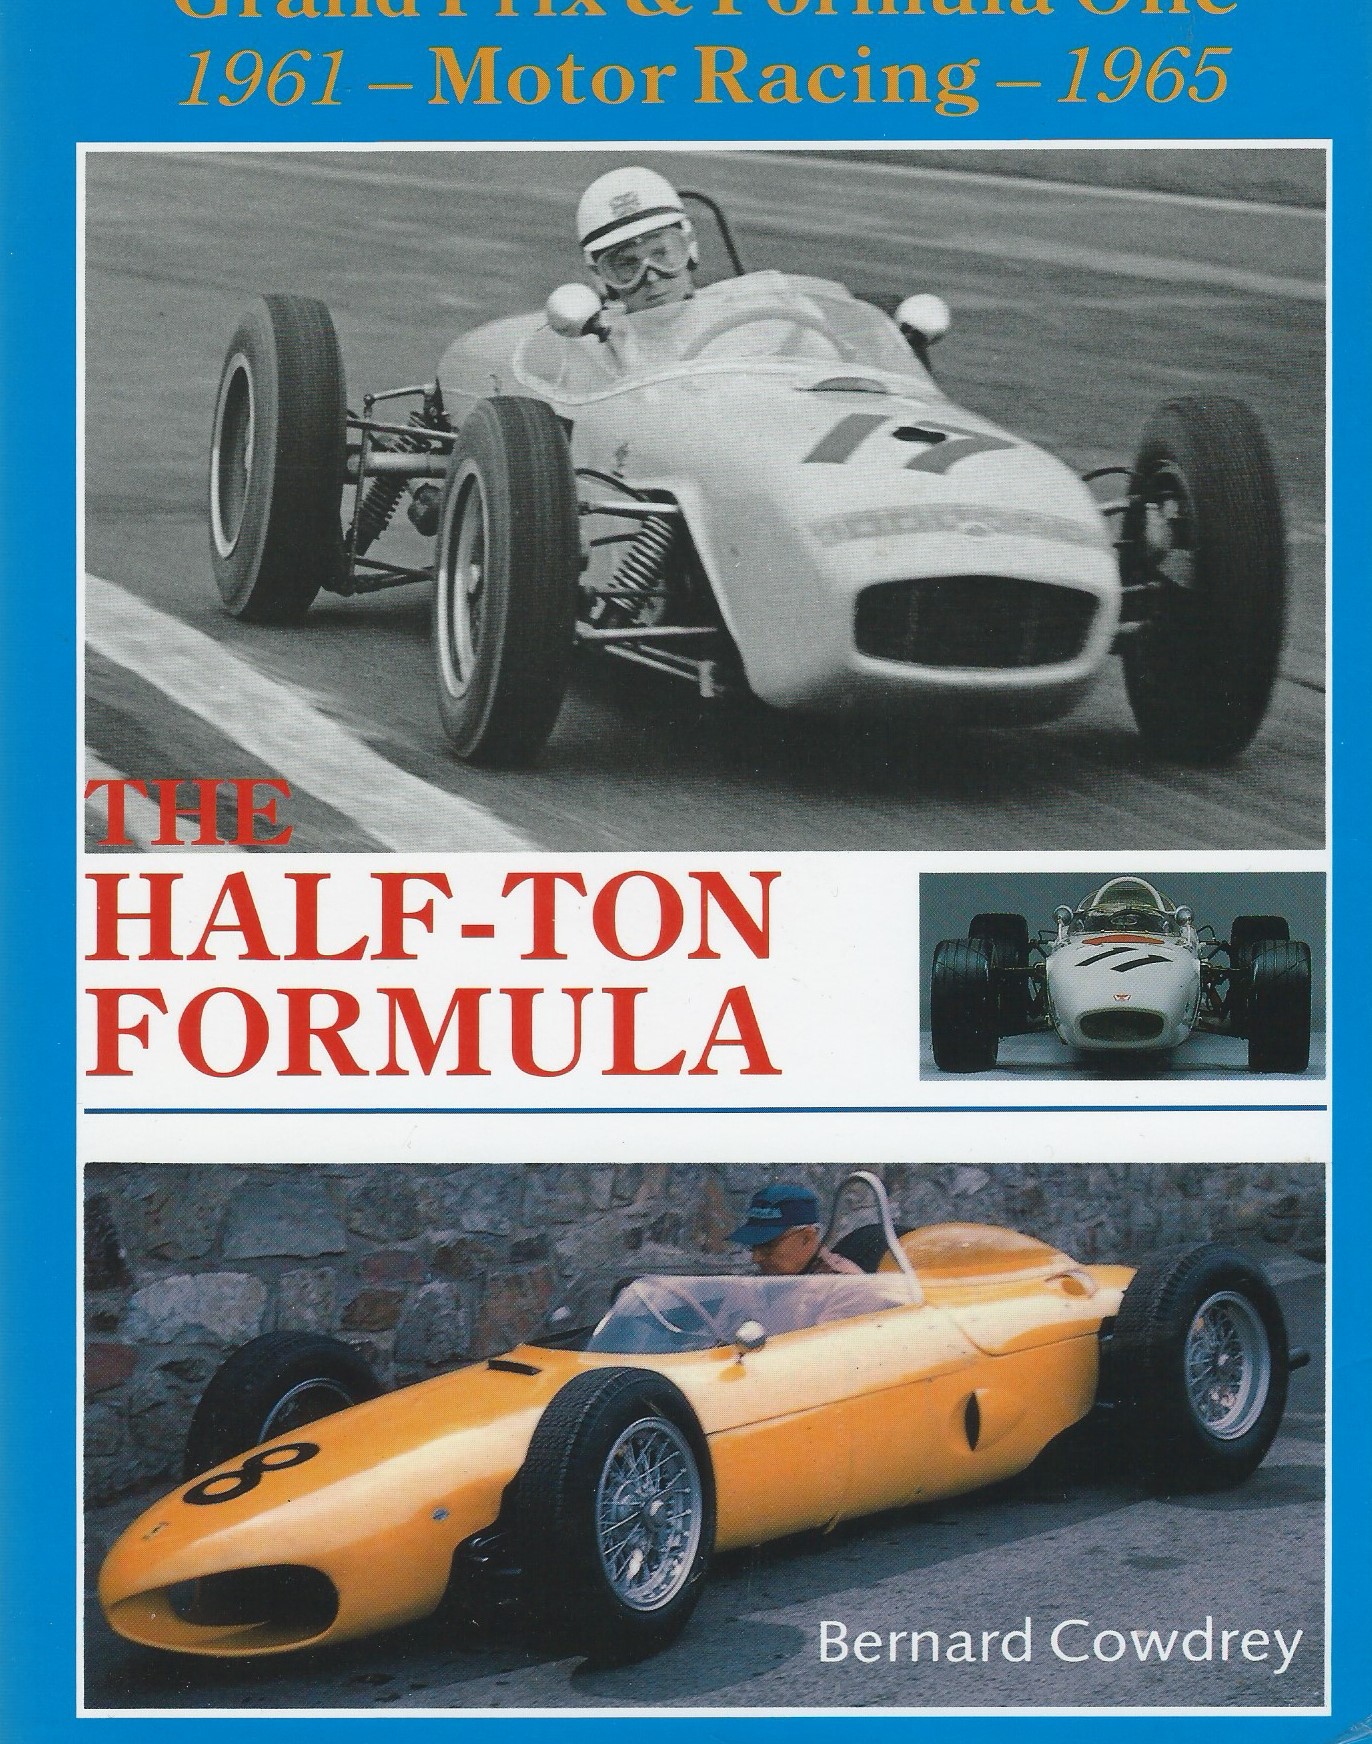 The HALF-TON FORMULA ~ Grand Prix & Formula One - Motor Racing - 1966 - Bernard Cowdrey